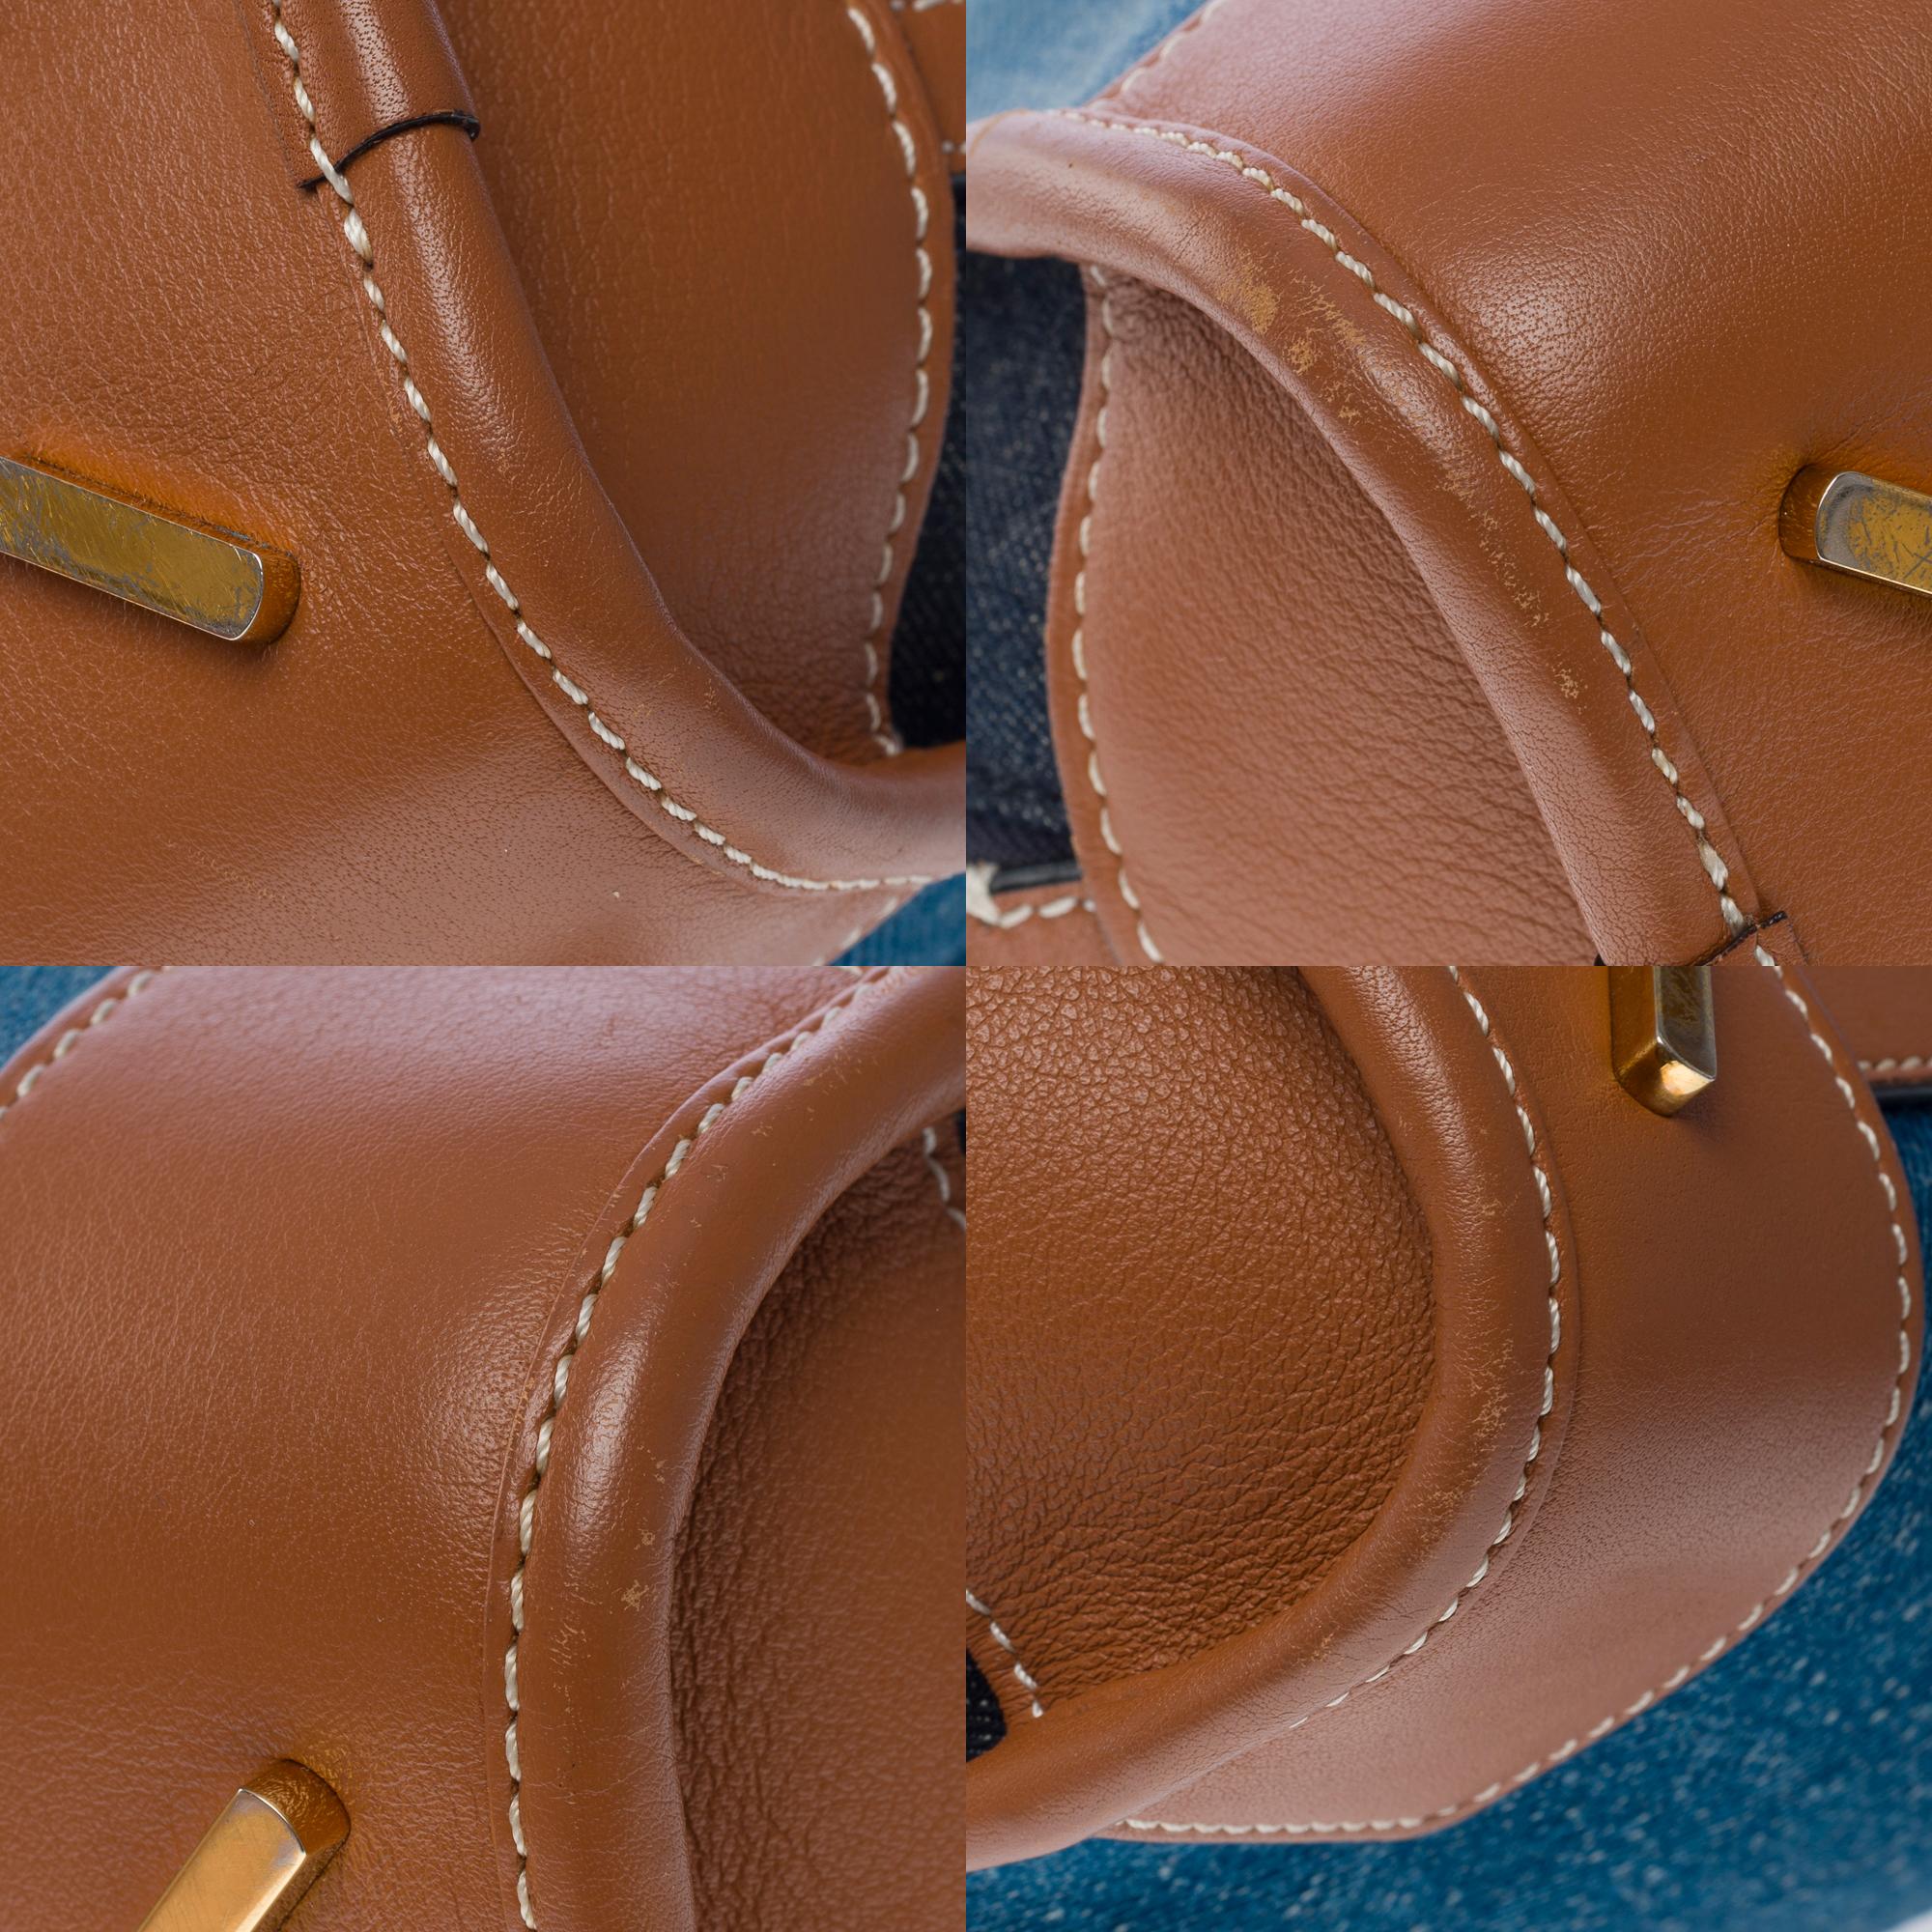 Loewe Amazona 23 2 Way handbag in denim and brown leather, GHW 6